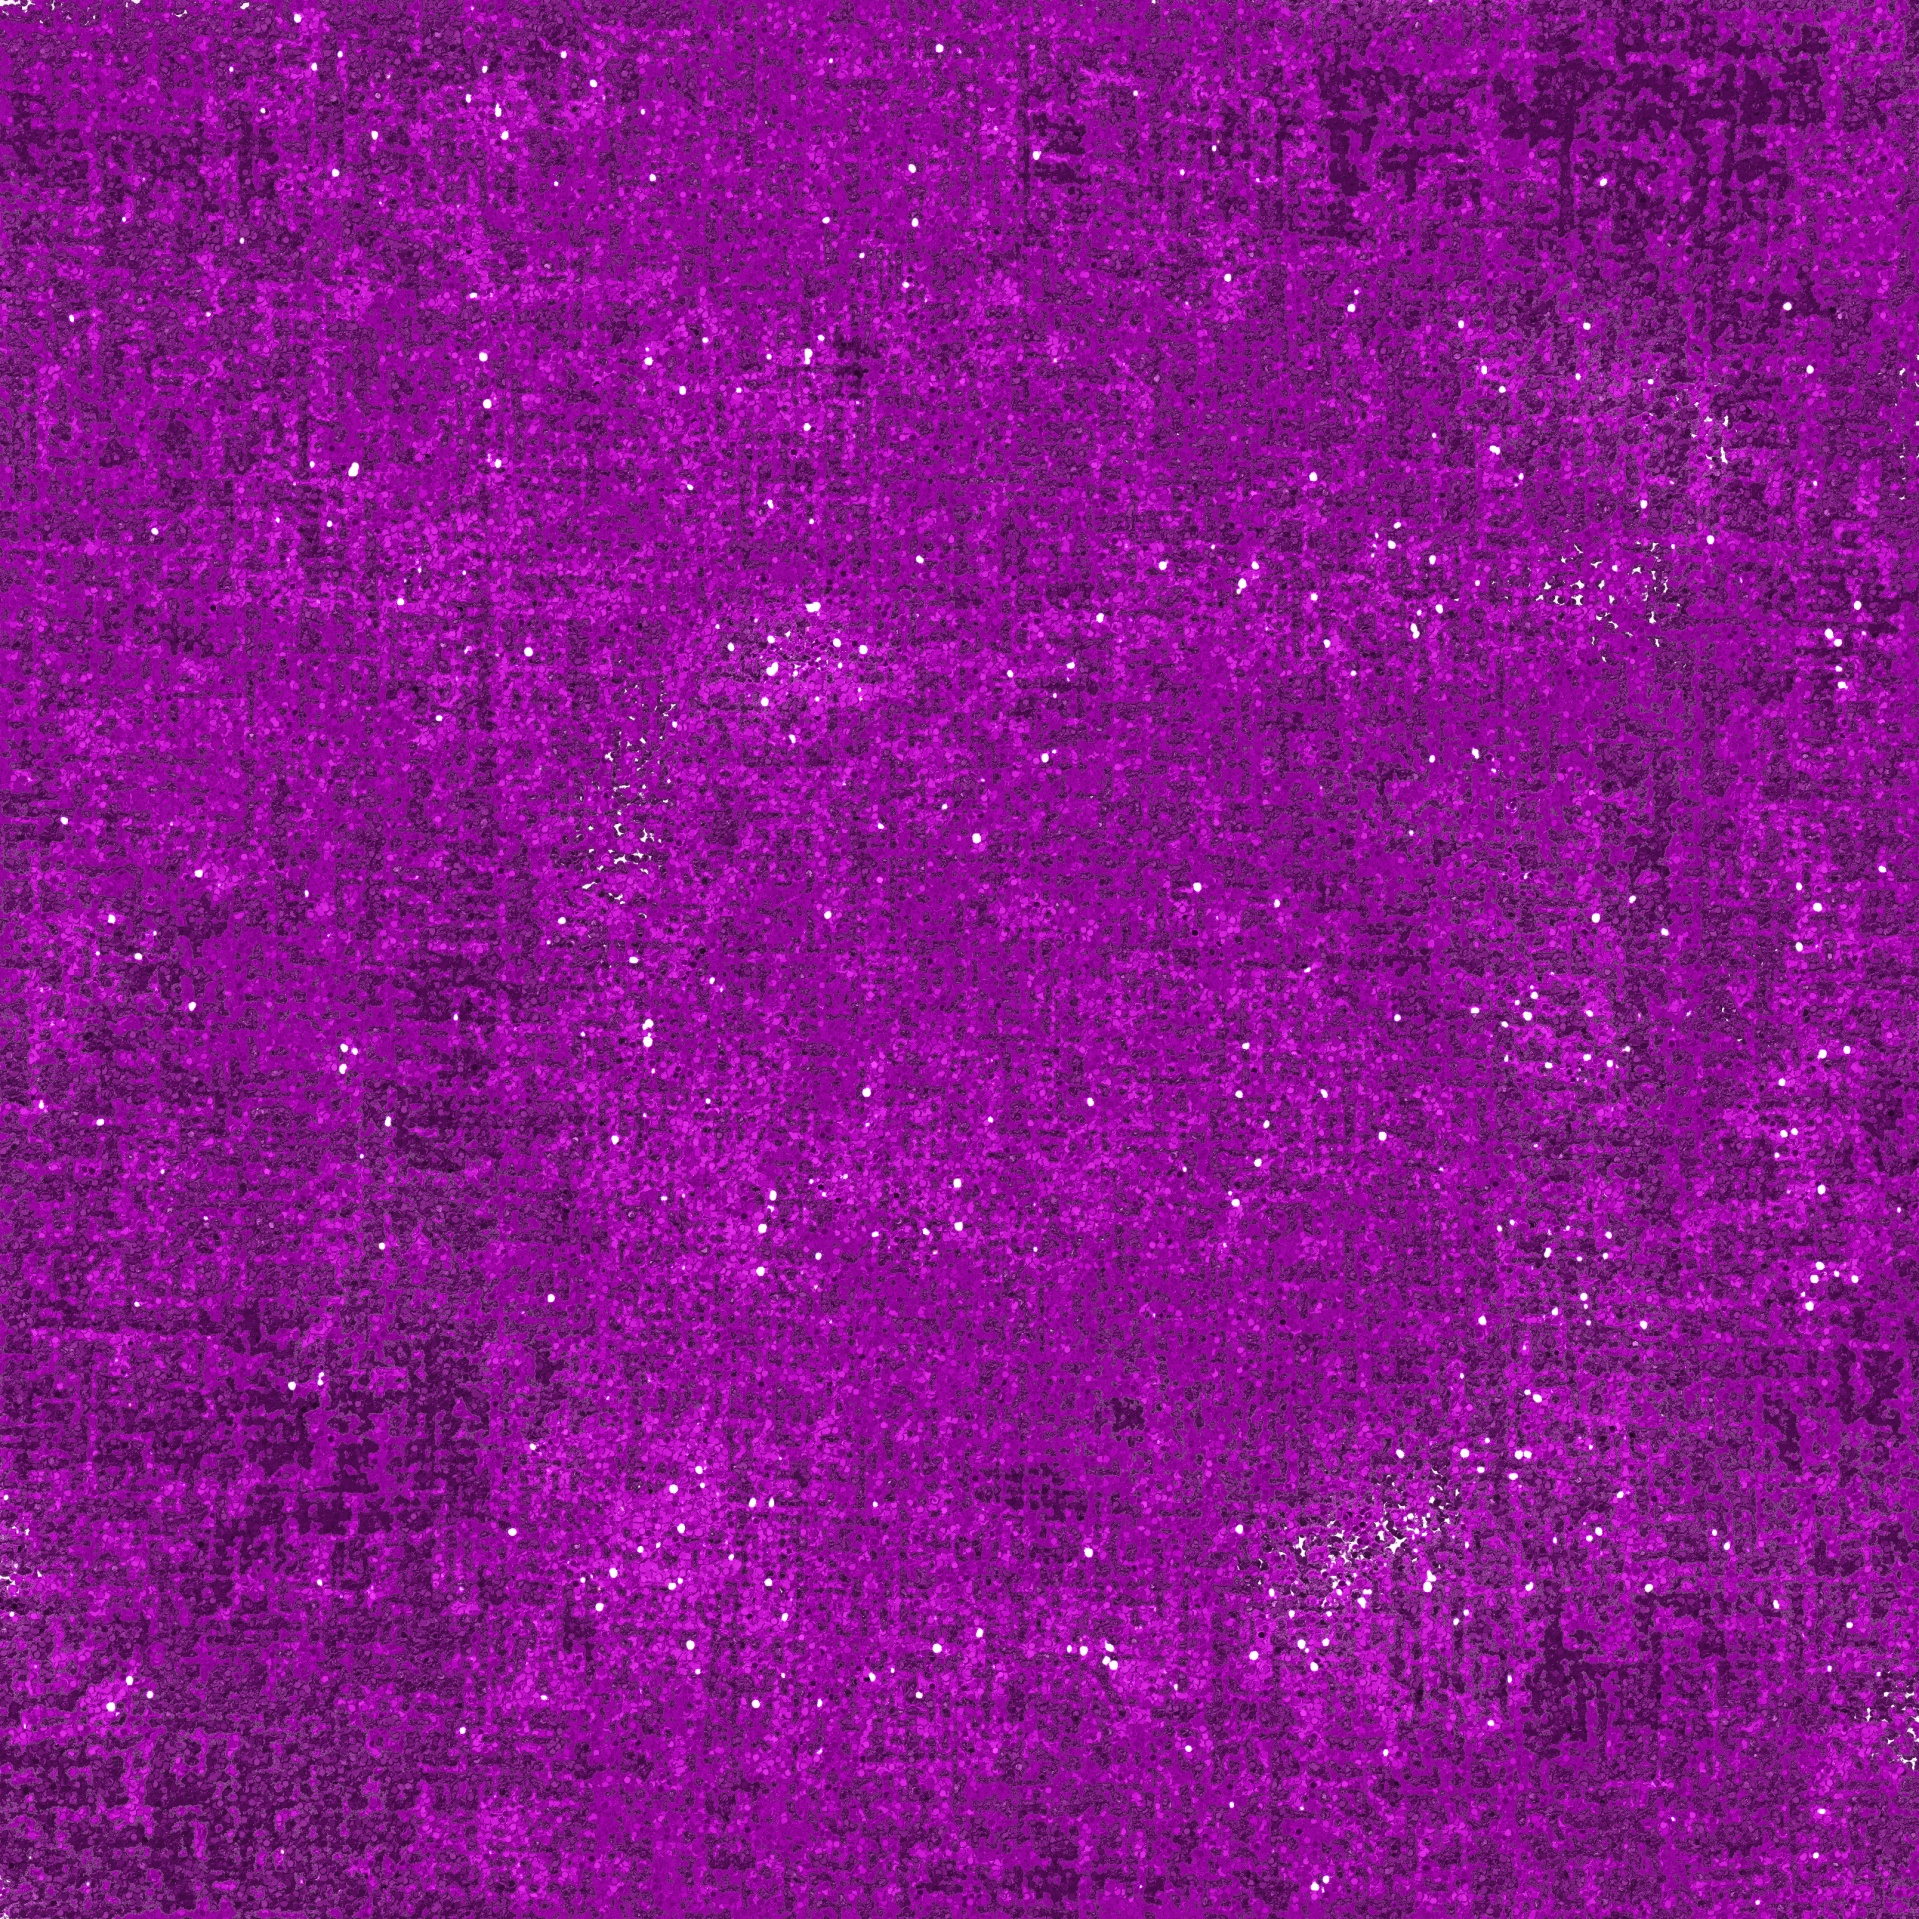 Rough Purple Texture Background